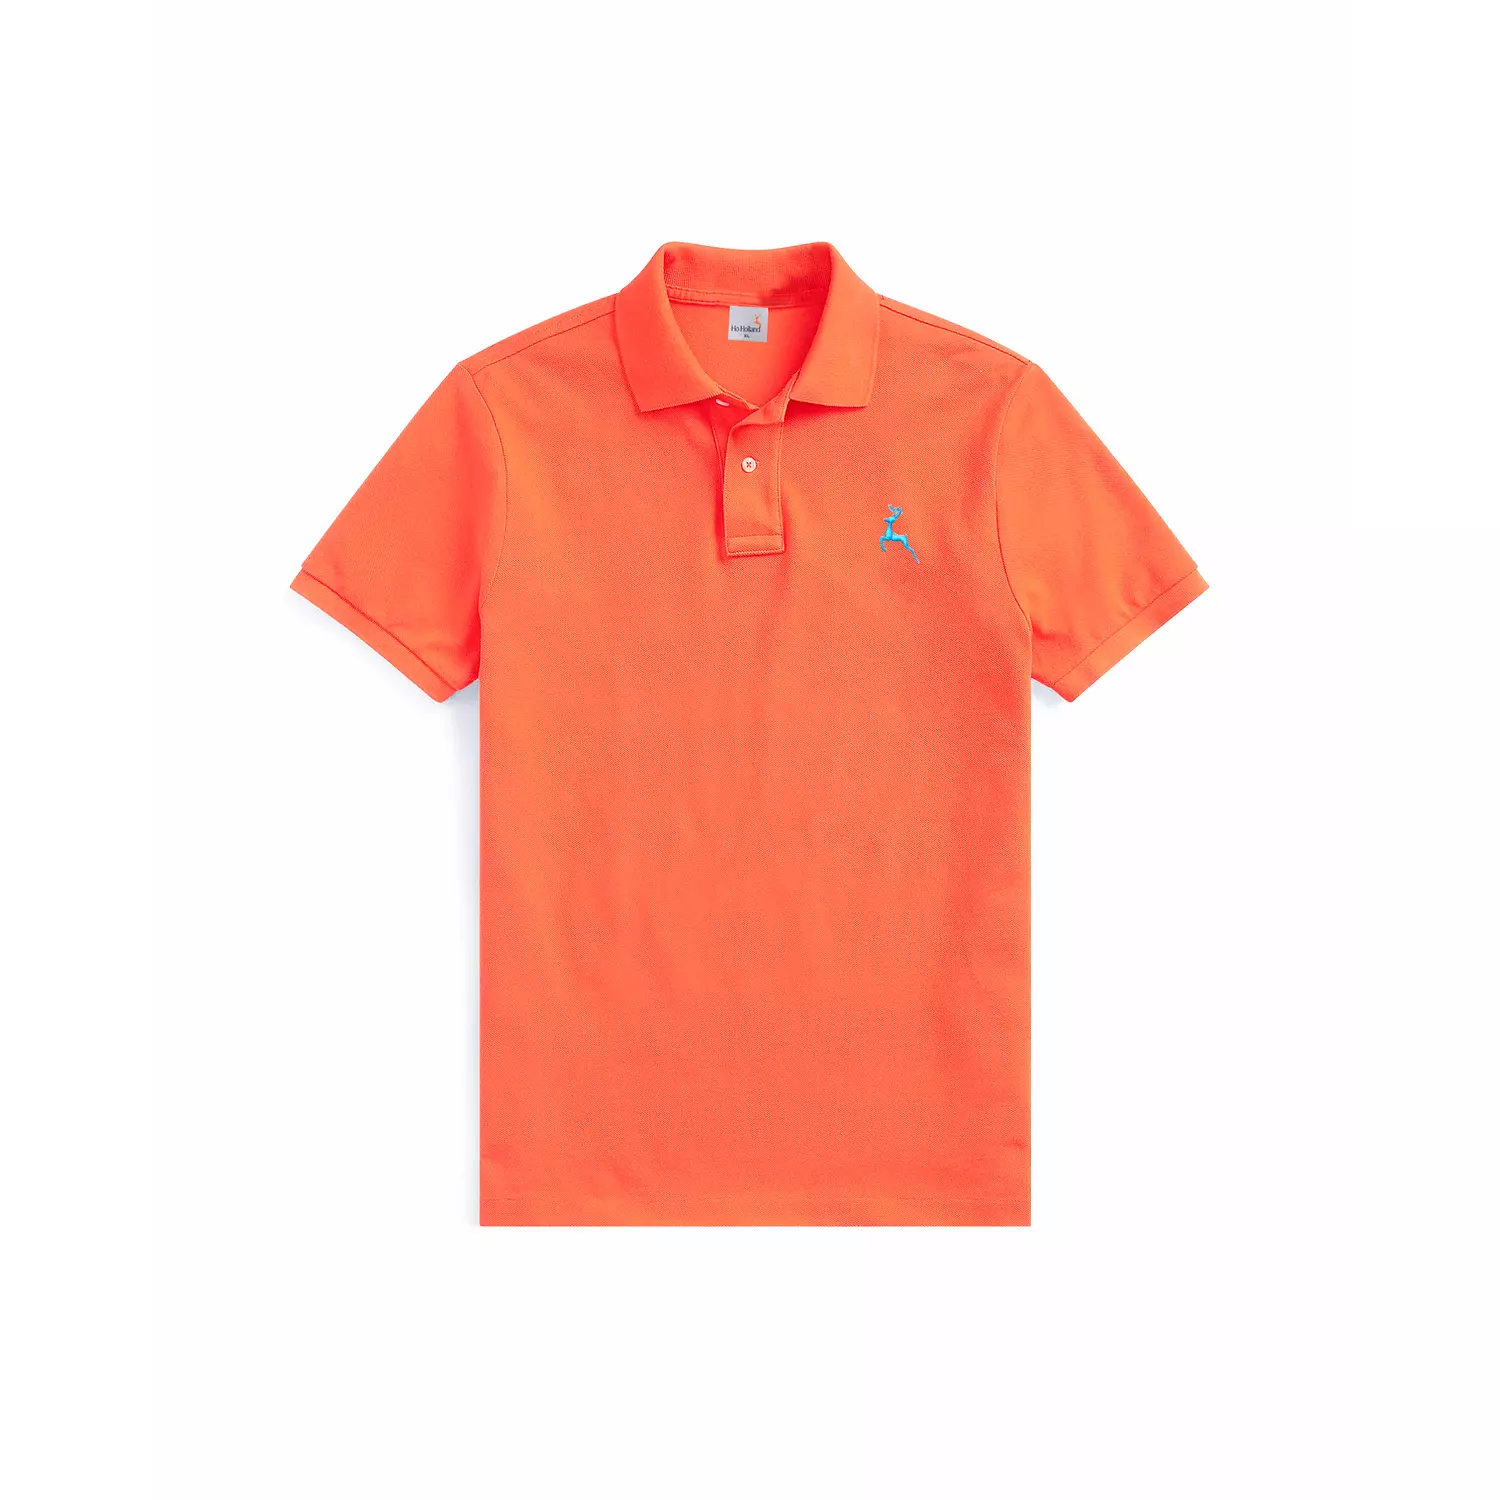 Polo T shirt - Orange hover image